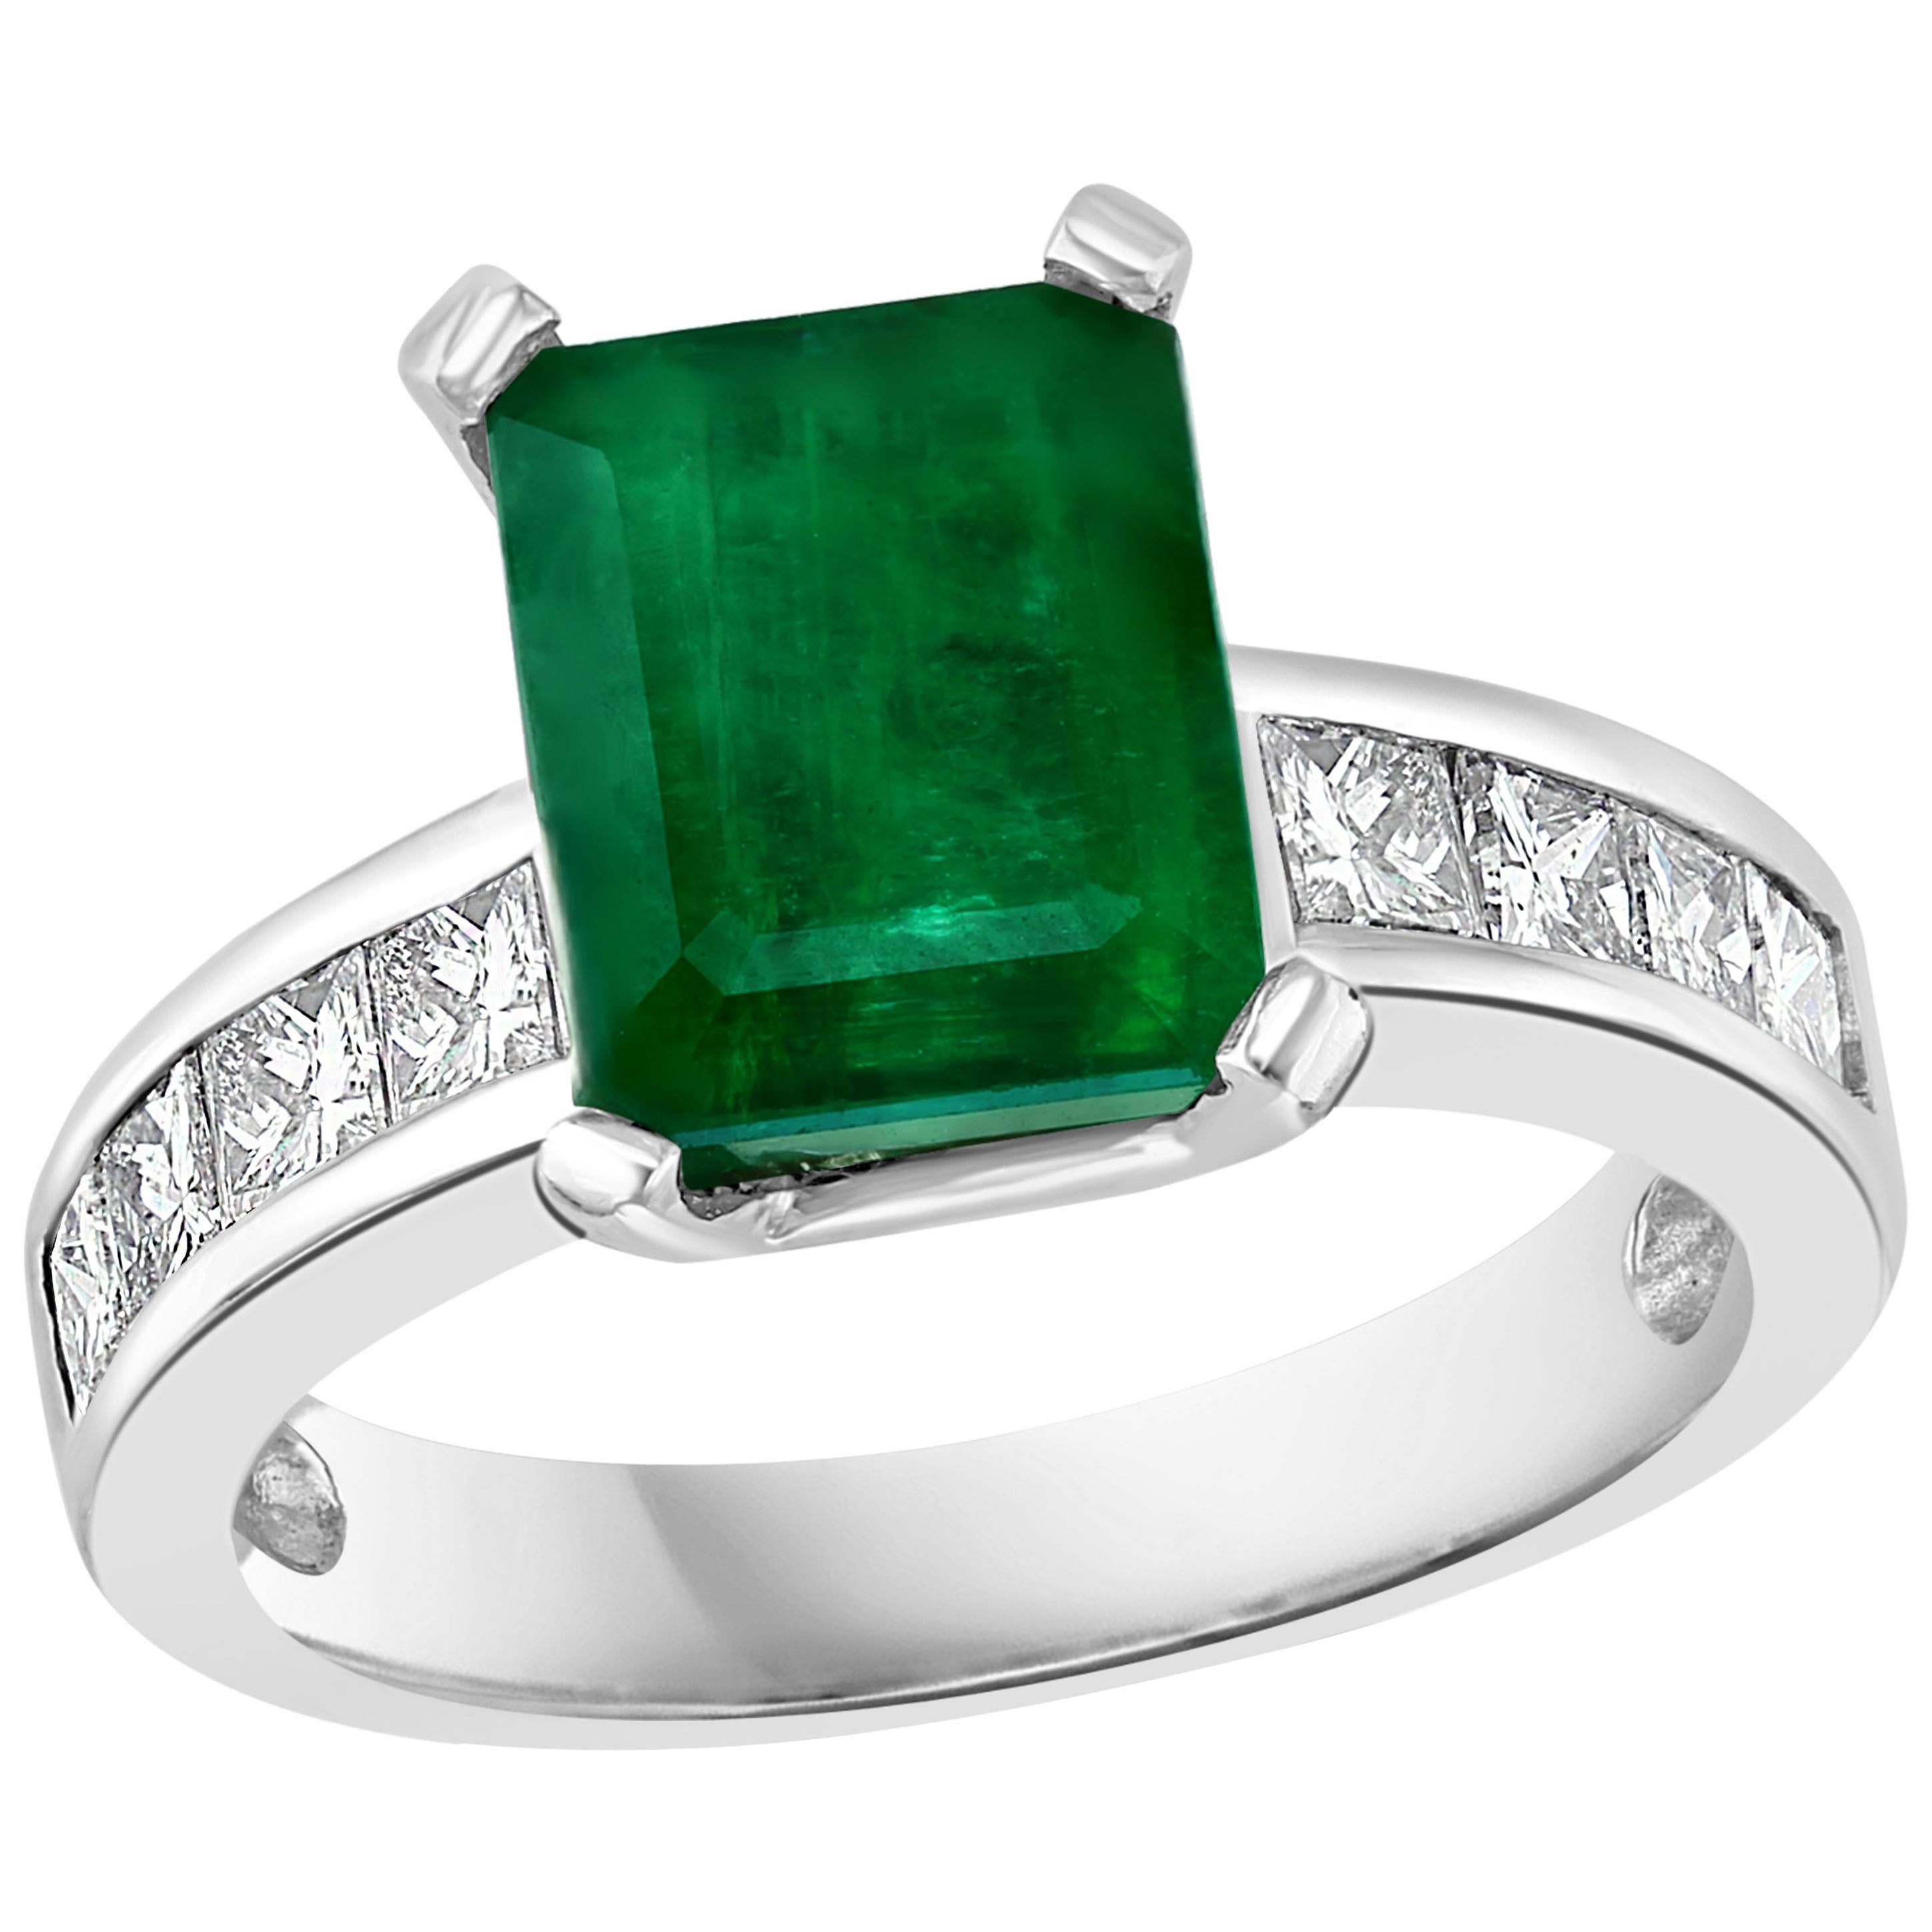 3.5 Carat Emerald Cut Emerald and 0.5 Carat Diamond Ring 14 Karat White Gold For Sale